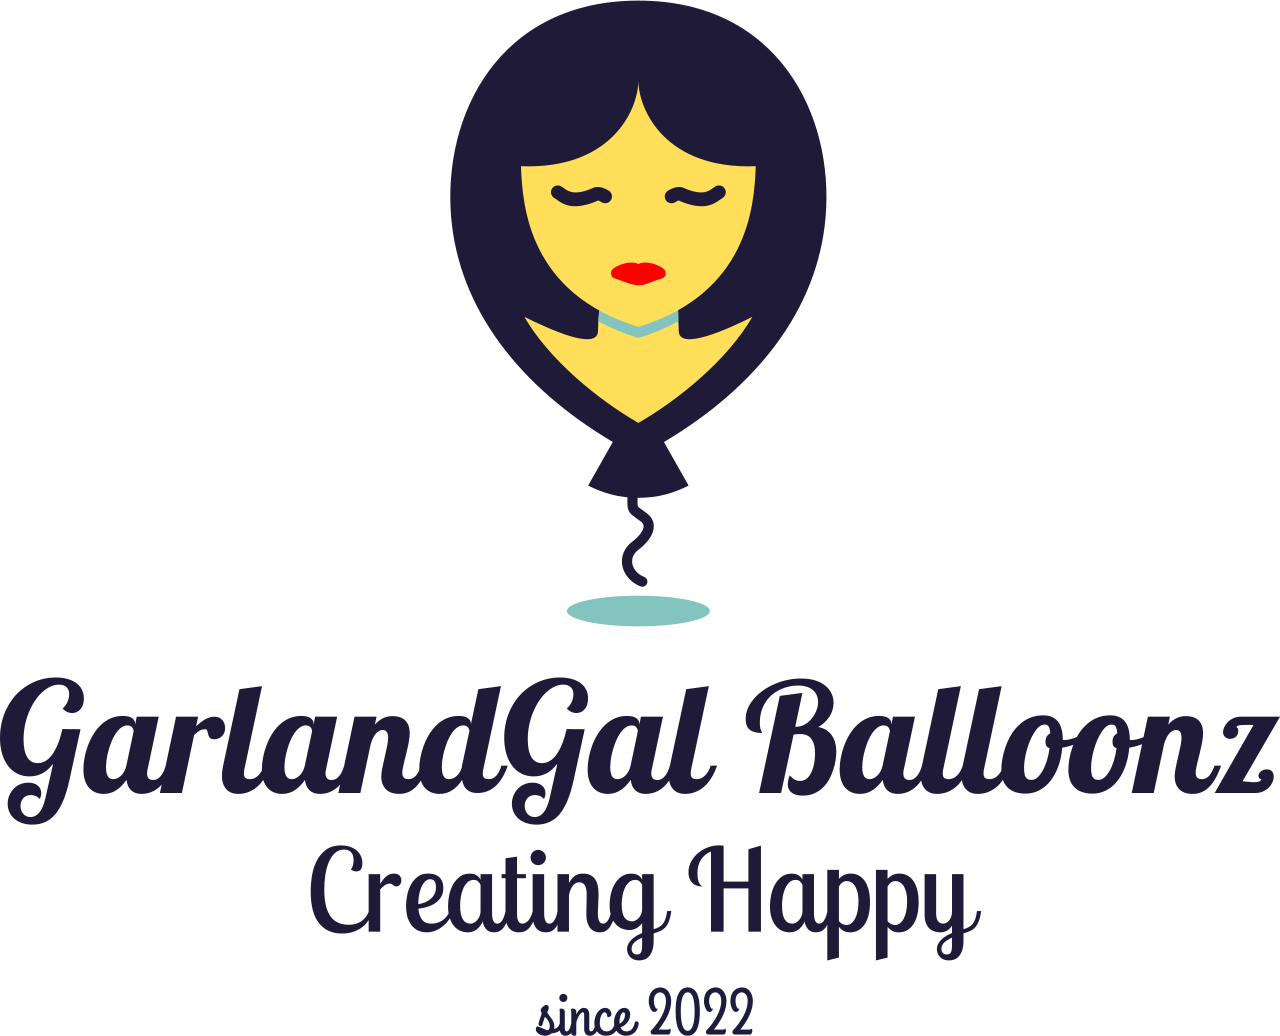 GarlandGal Balloonz's web page